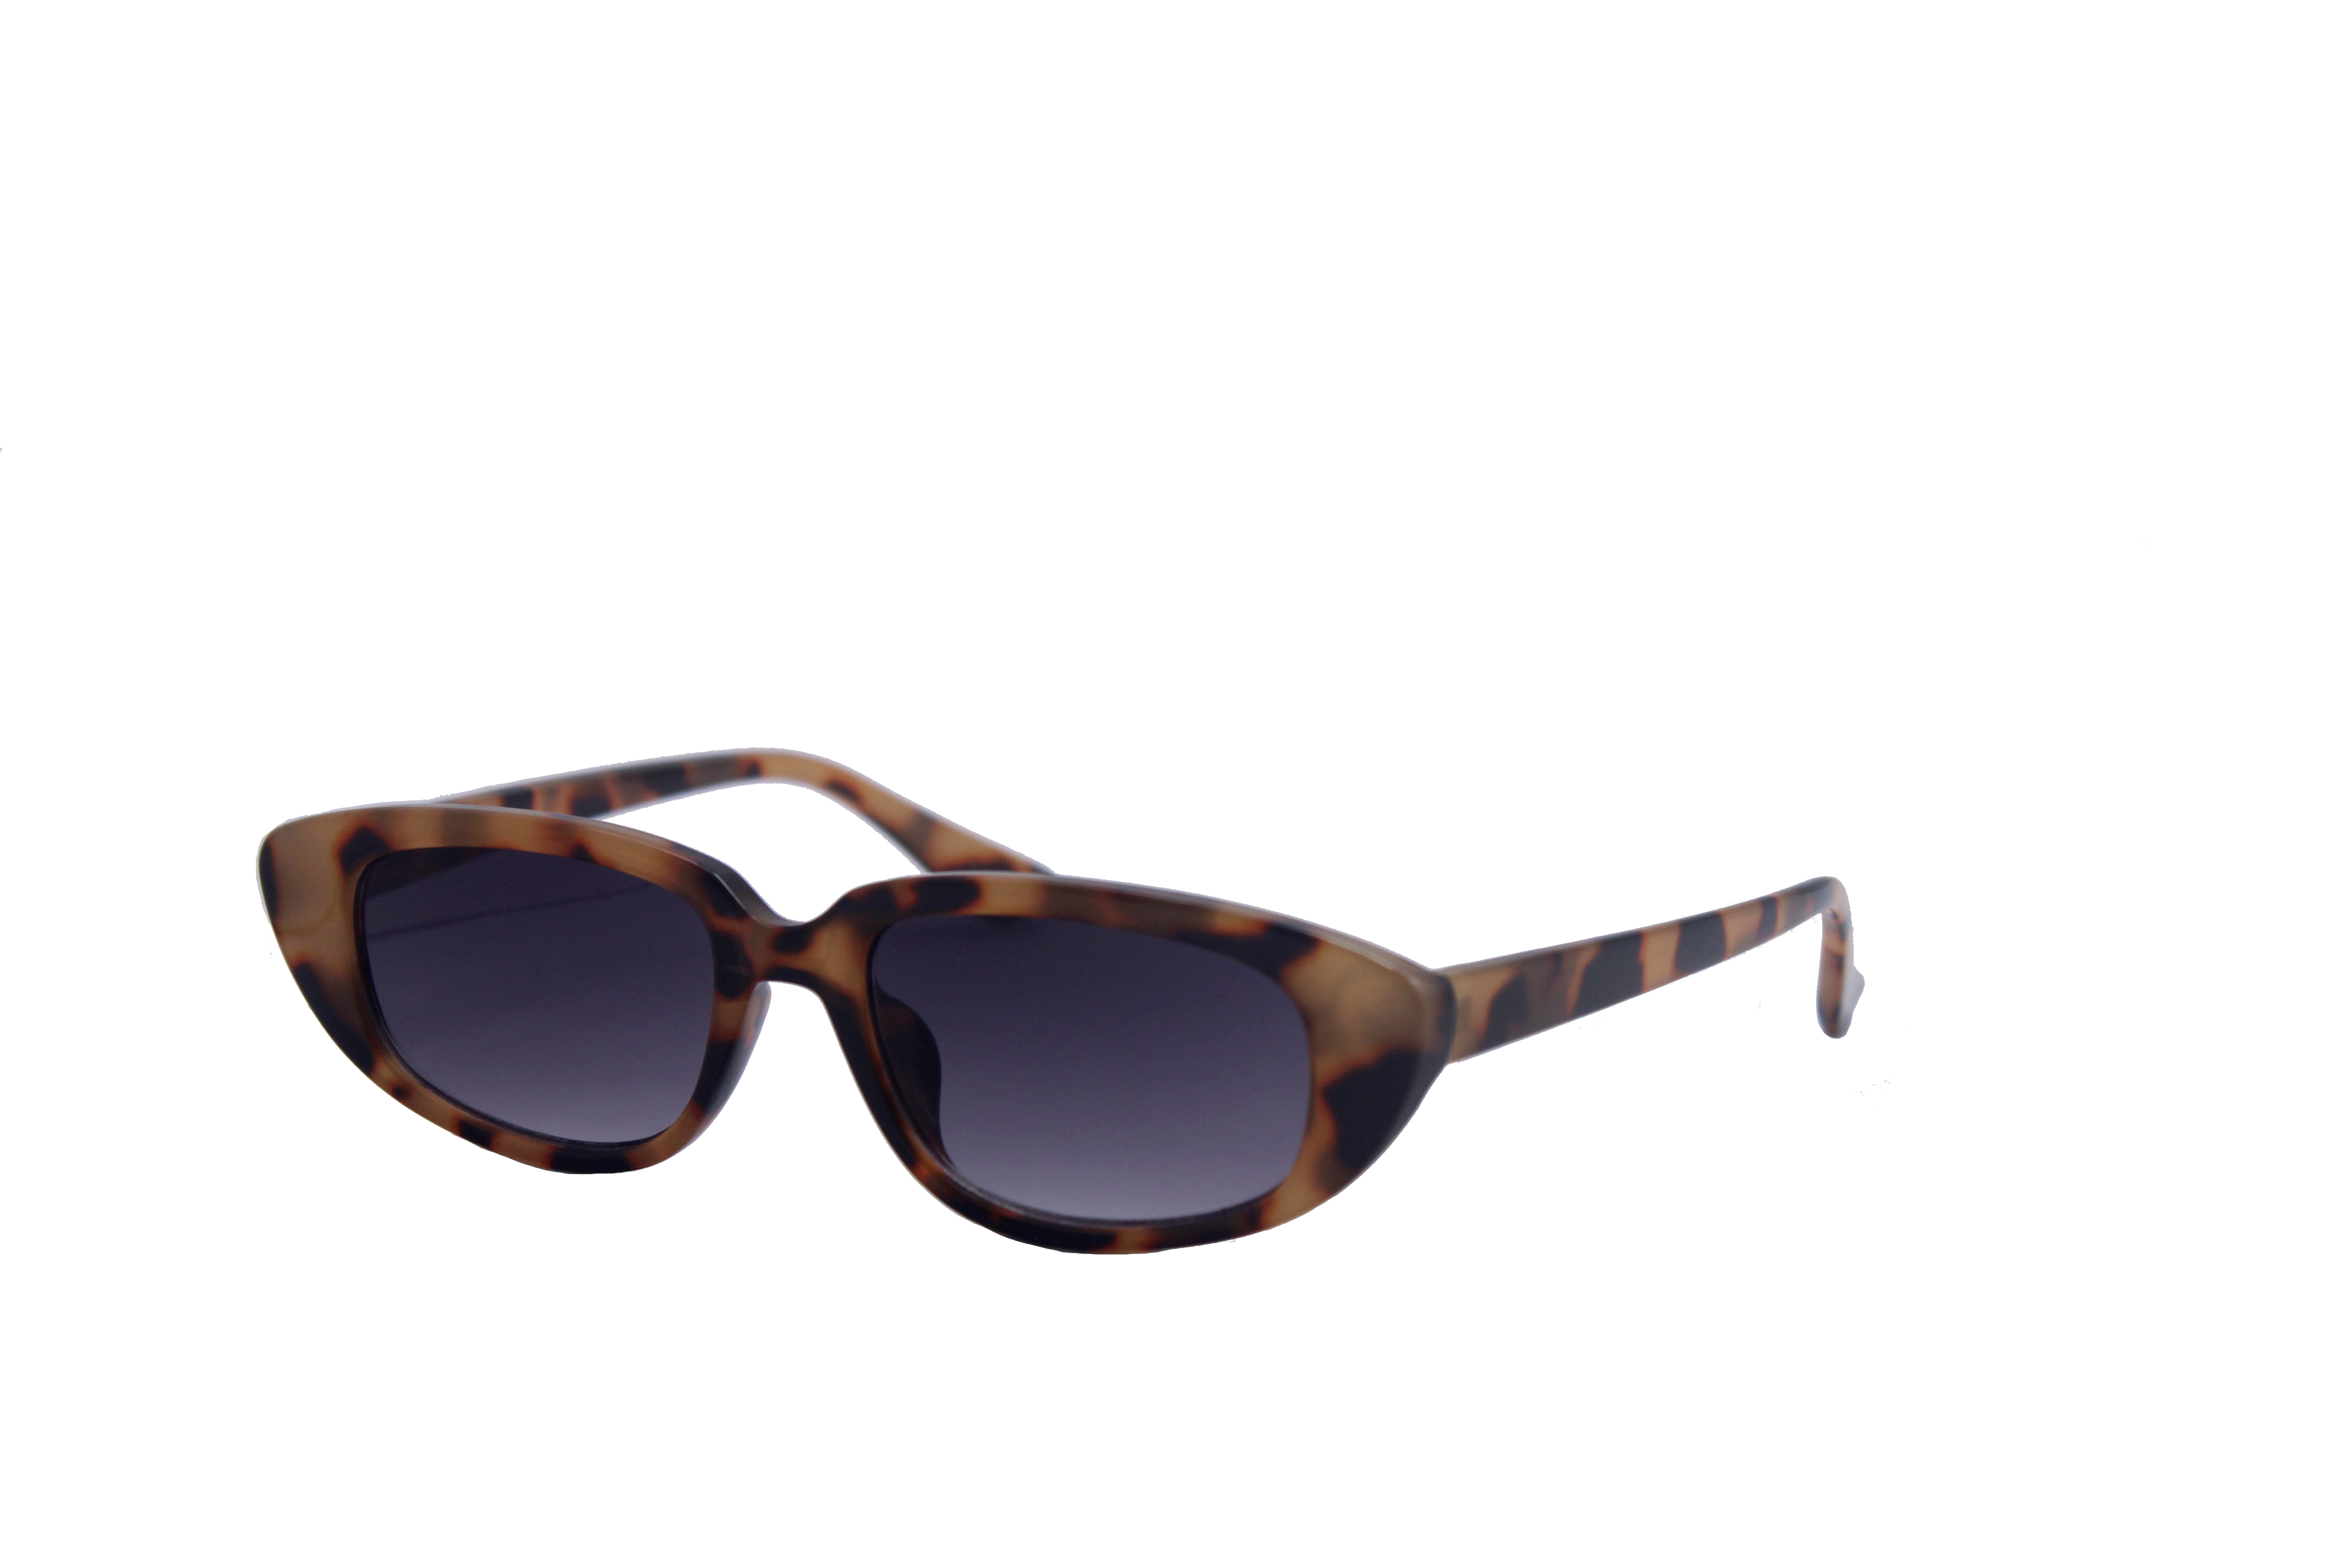 Mujeres forma ovalada Max Fashion PC gafas de sol #81478